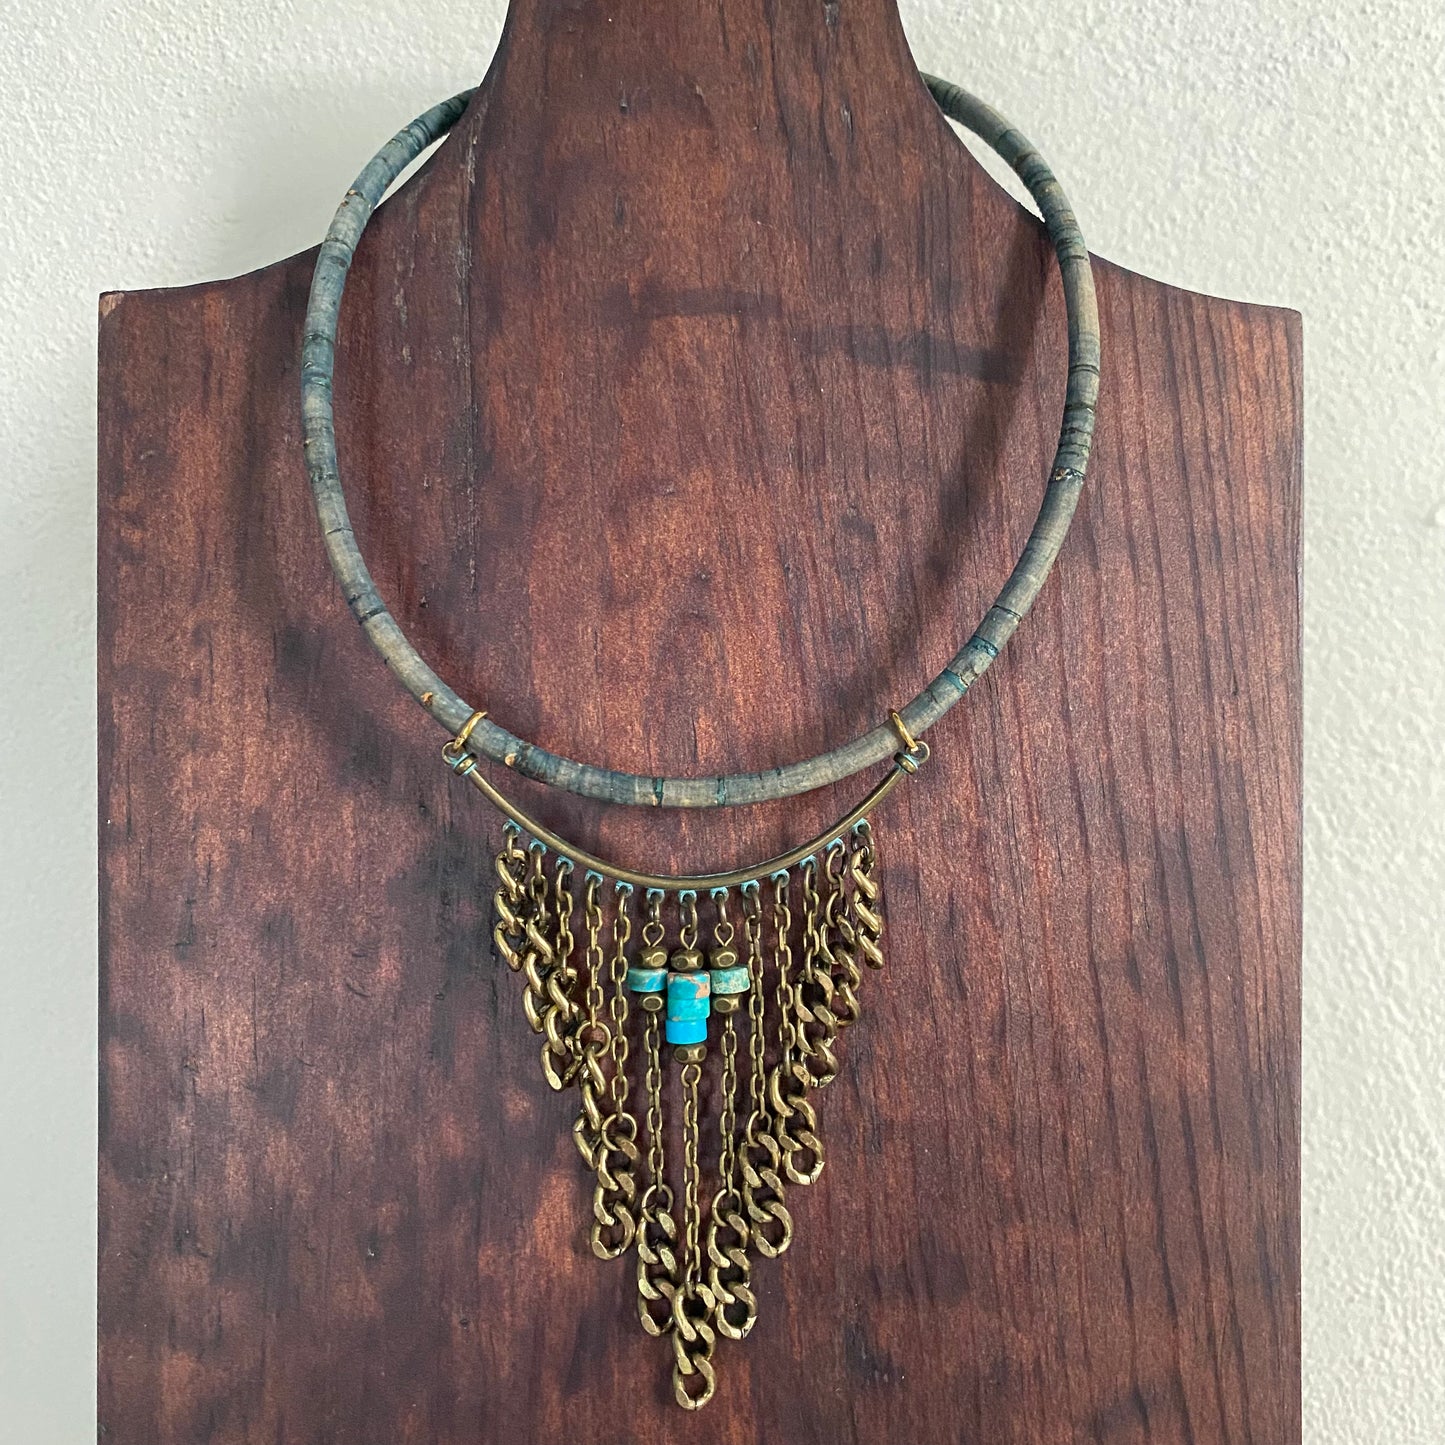 Cork/Chain Necklace